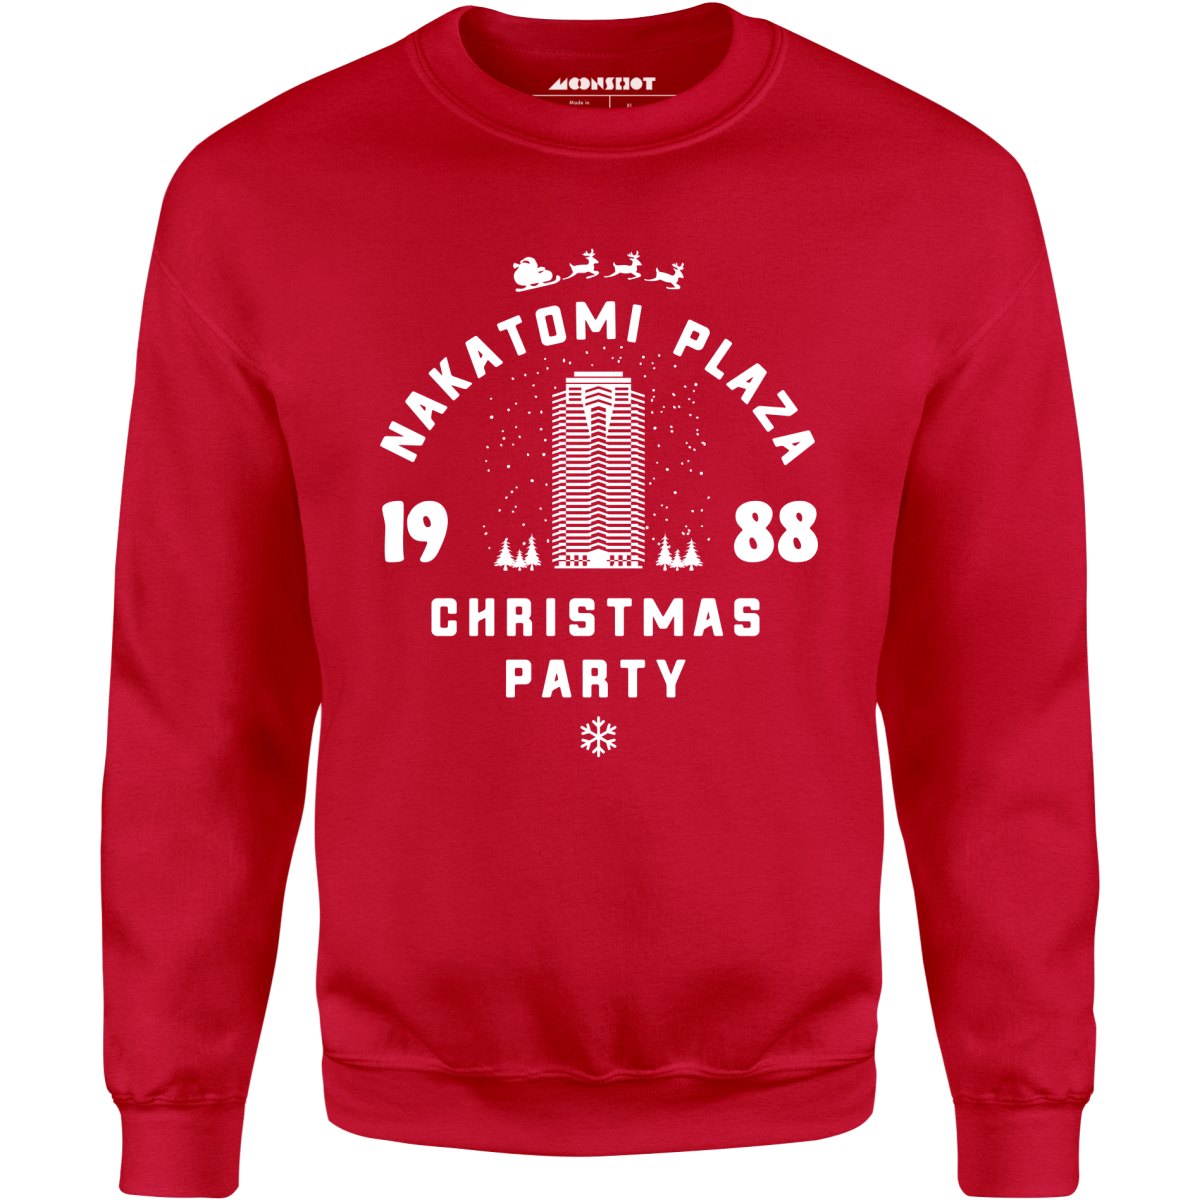 Nakatomi Plaza Christmas Party - Unisex Sweatshirt